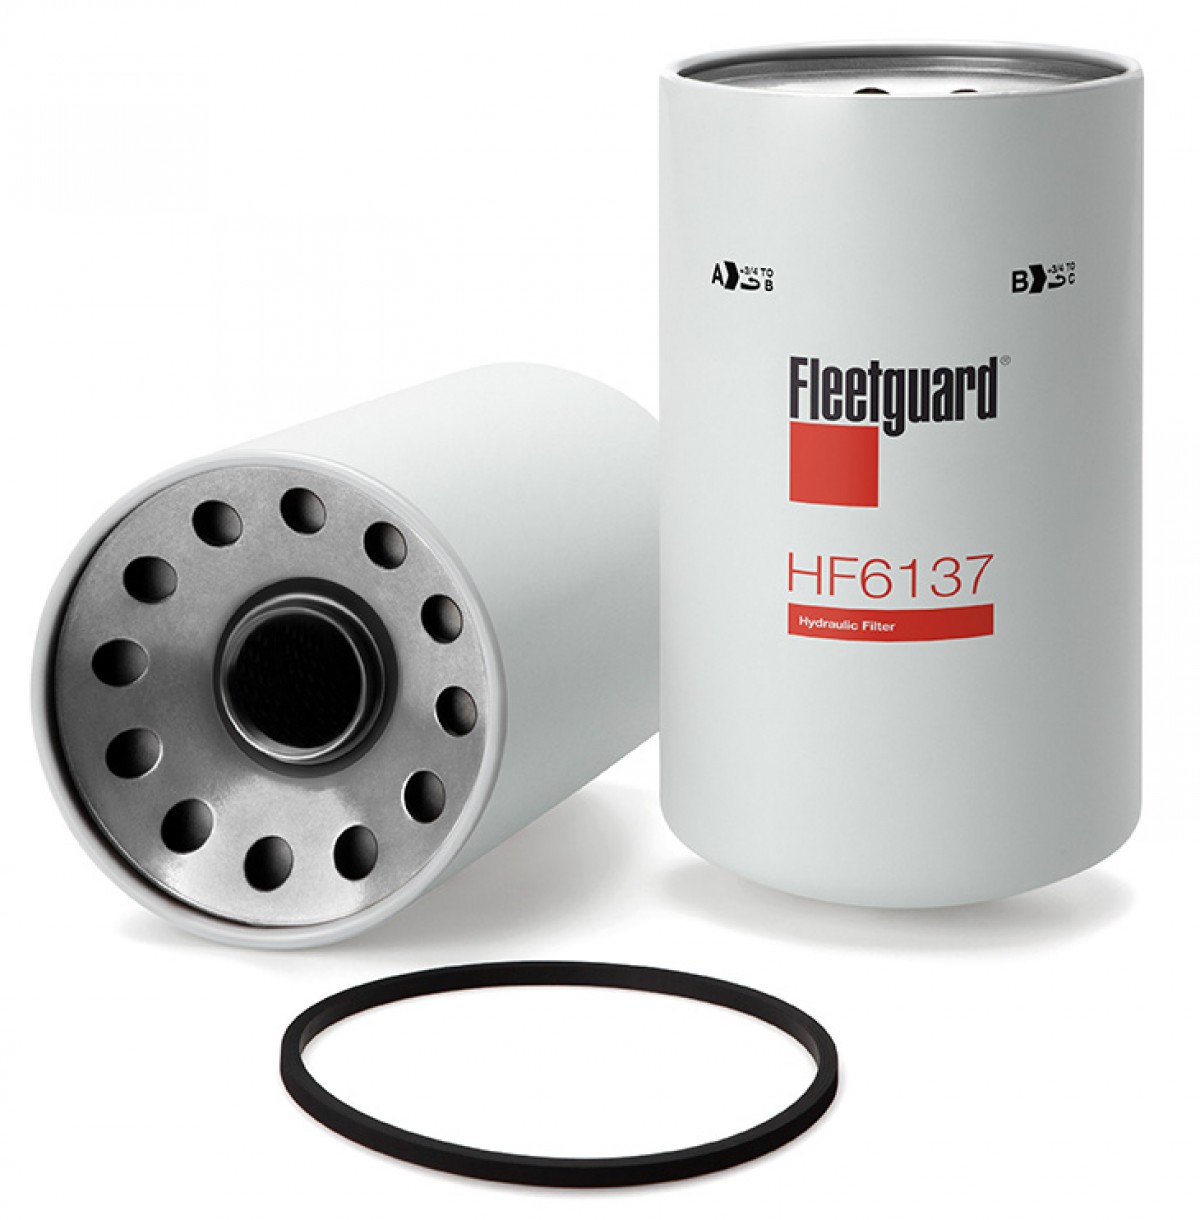 Filtr hydrauliczny  HF 6137 